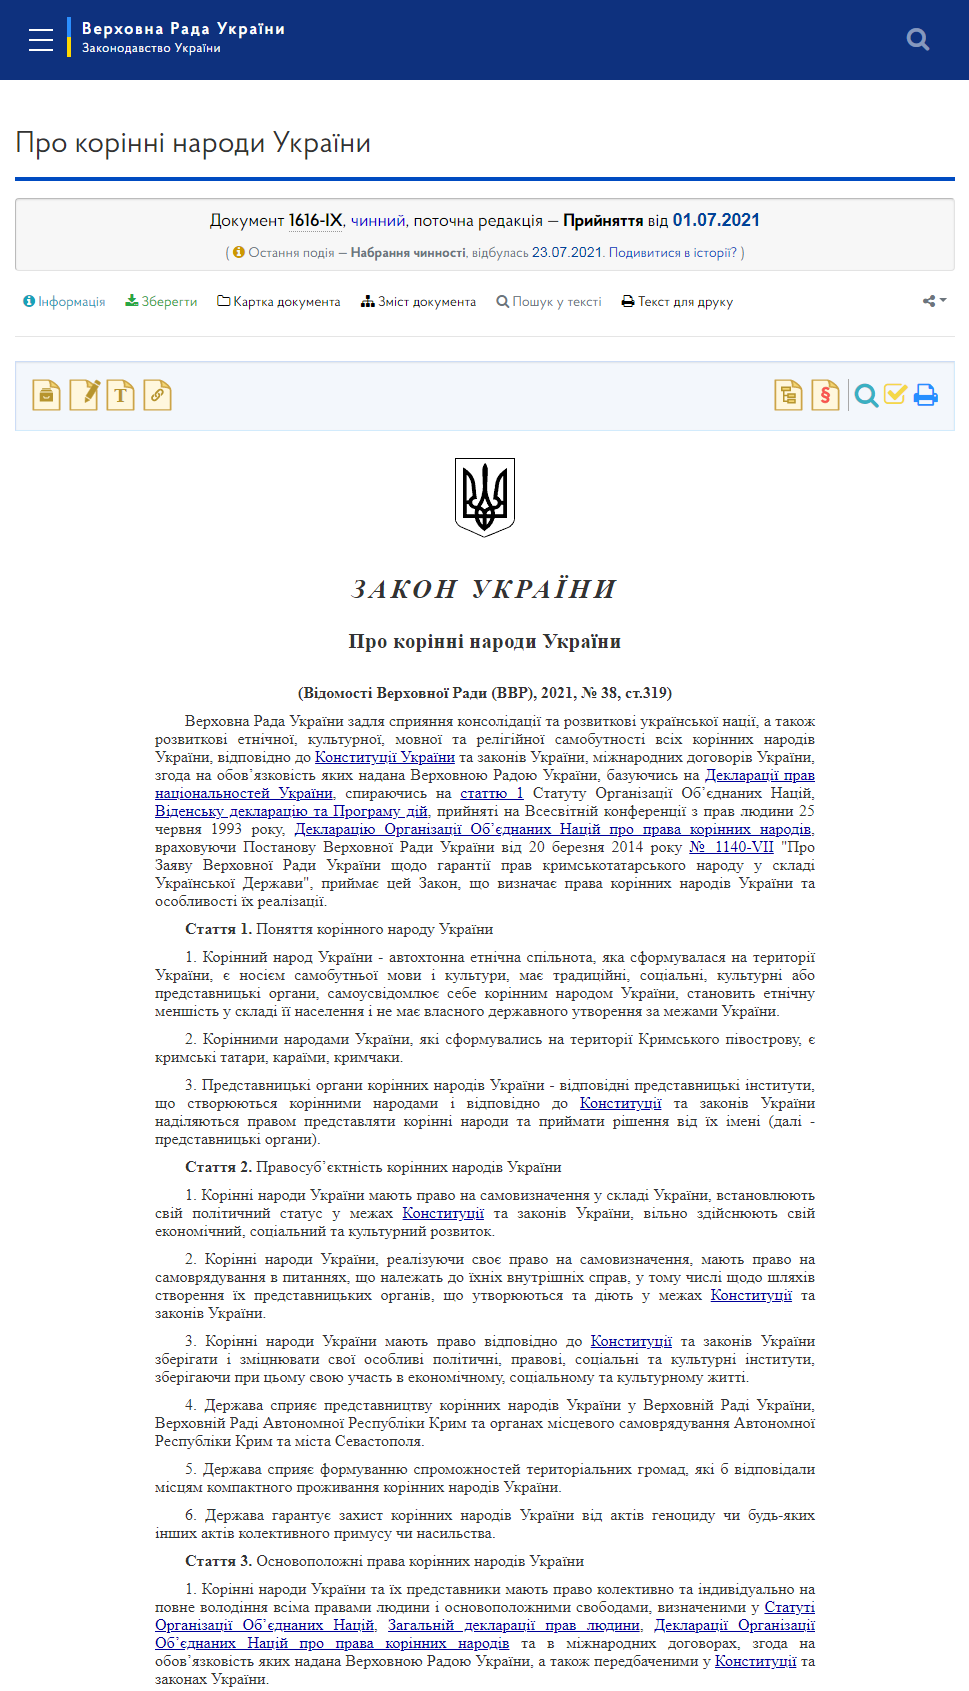 https://zakon.rada.gov.ua/laws/show/1616-20#Text